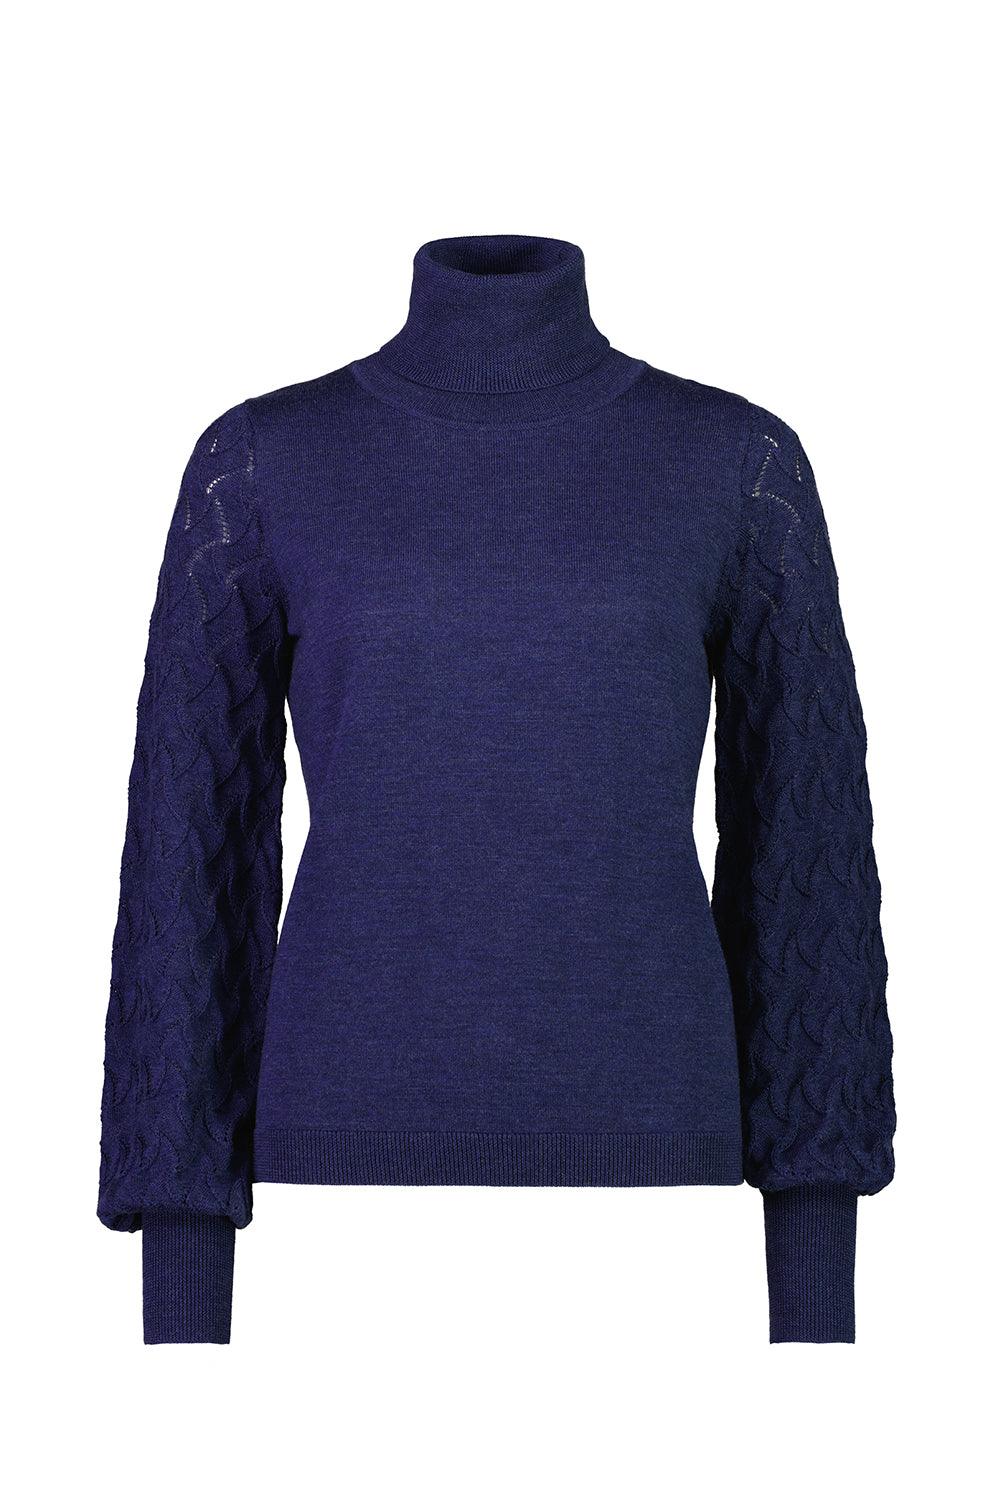 Sofie Sweater - Ink Marle - Sweater VERGE